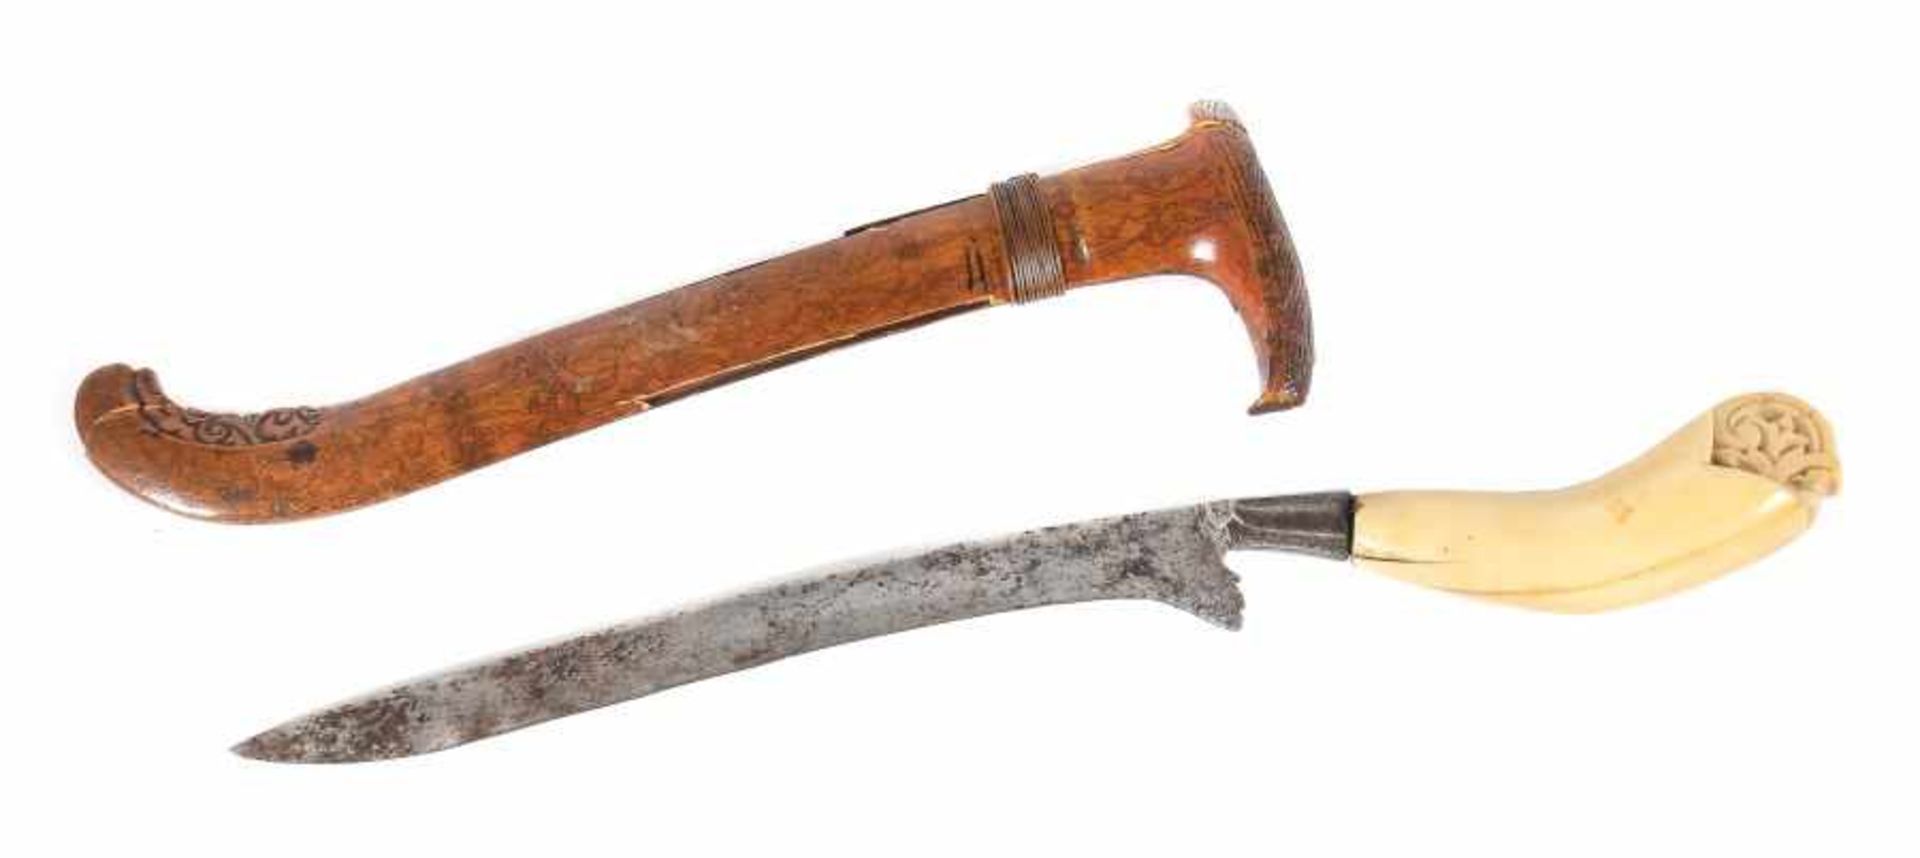 Indonesisches Messer19. Jh./Anfang 20. Jh., Rückenklinge mit konkav gebogener Schärfe, gebogener